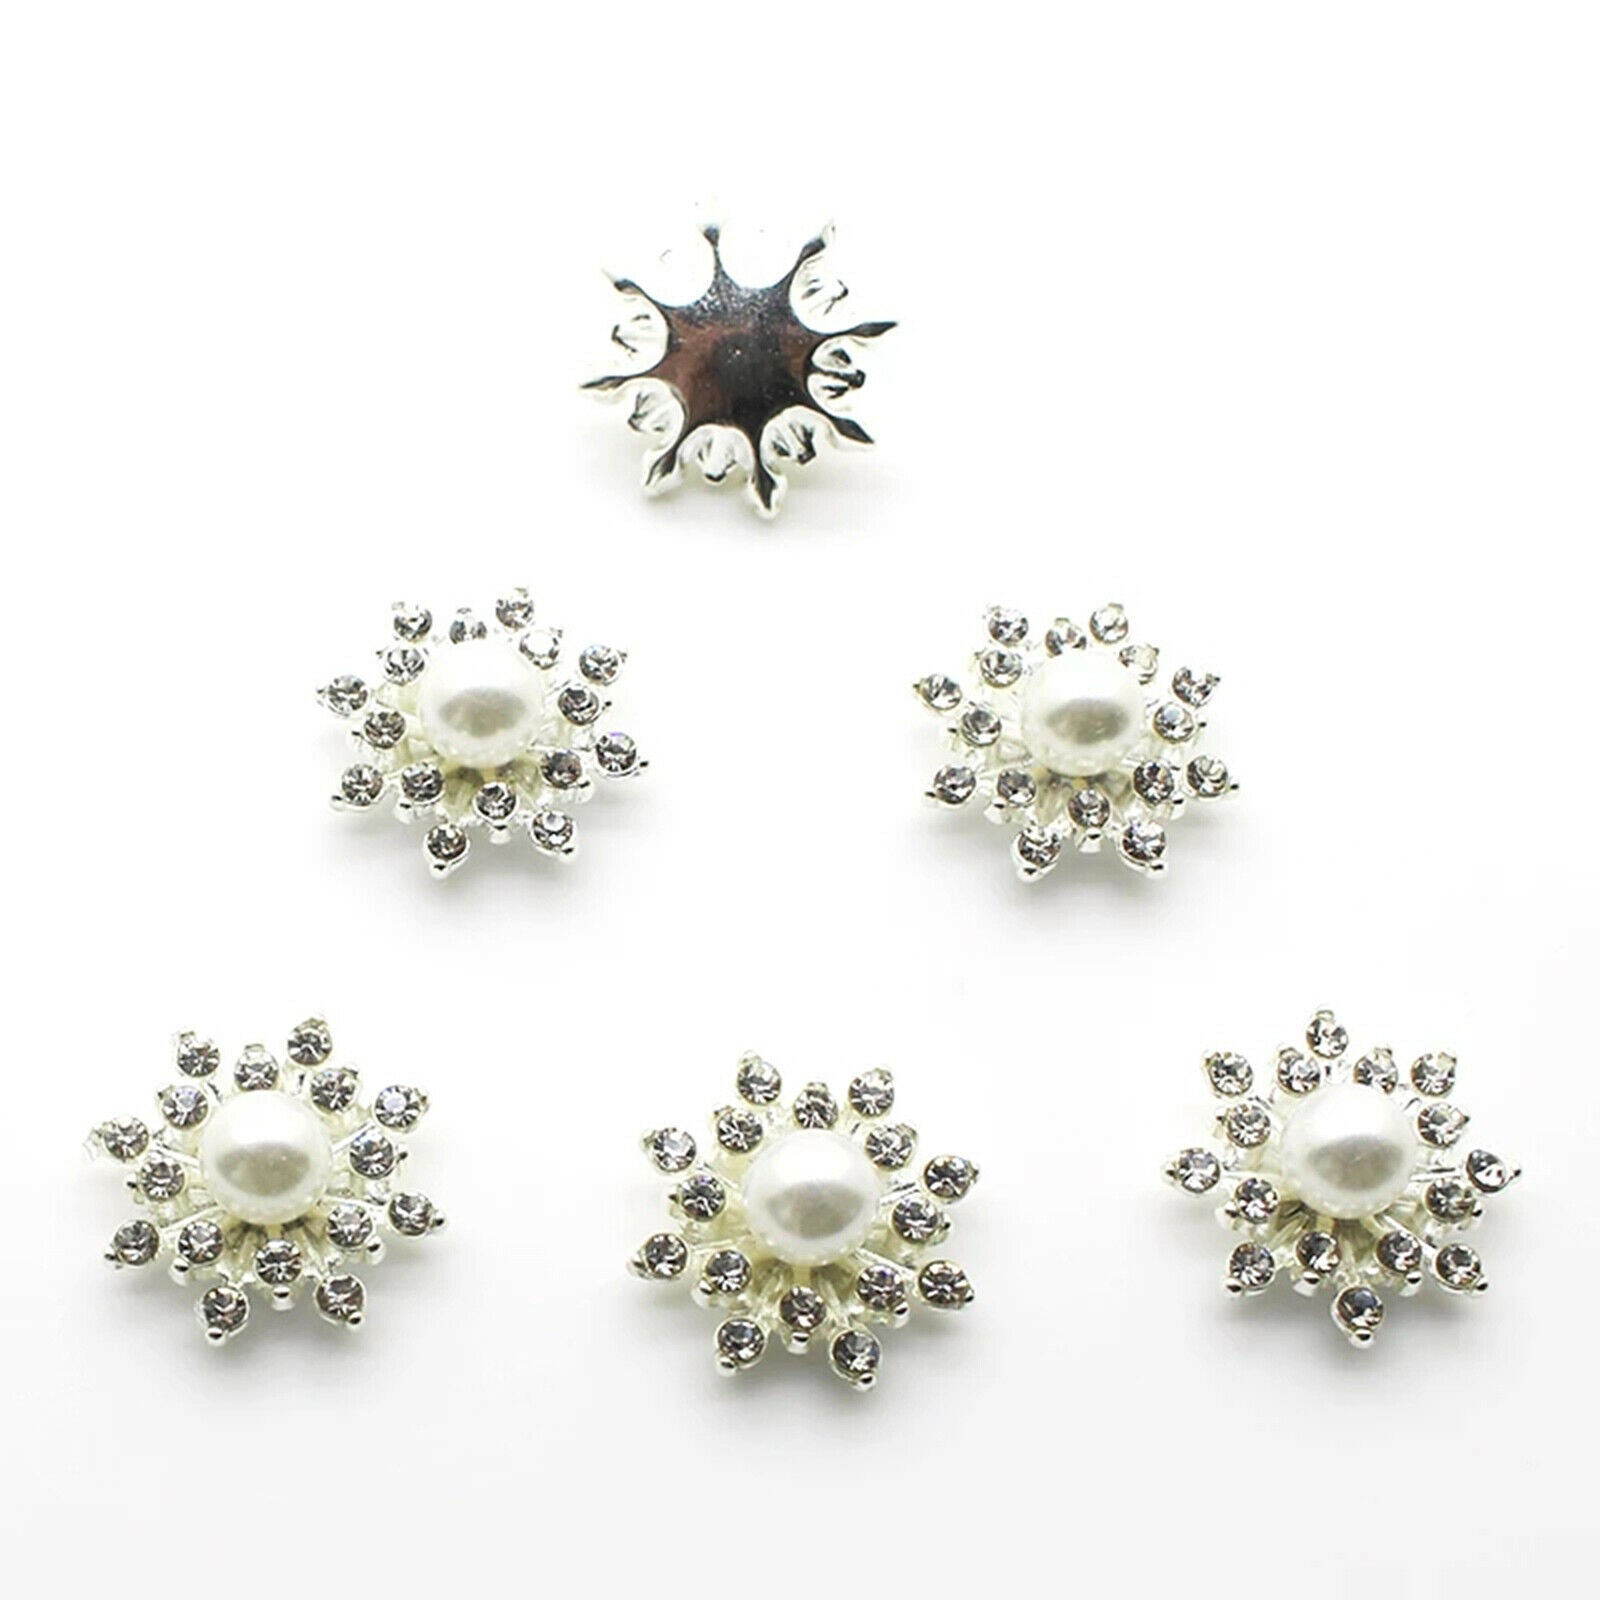 16mm Rhinestone Embellishments for Buttons Brooches Flower Wedding Decor